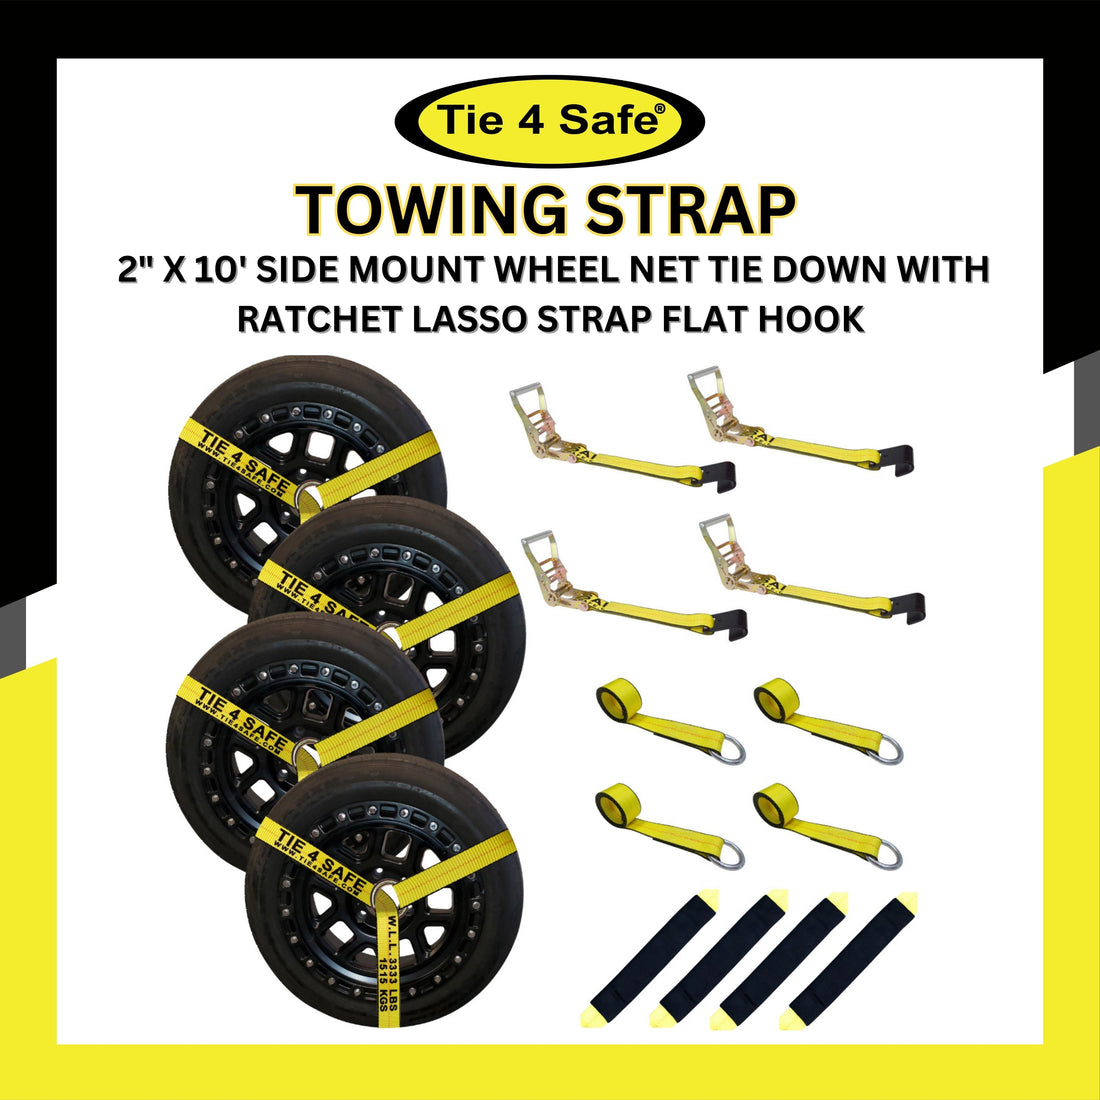 USA 4 Pack 2" x10' Side Mount Wheel Net Tie Down With Ratchet Lasso Strap Flat Hook